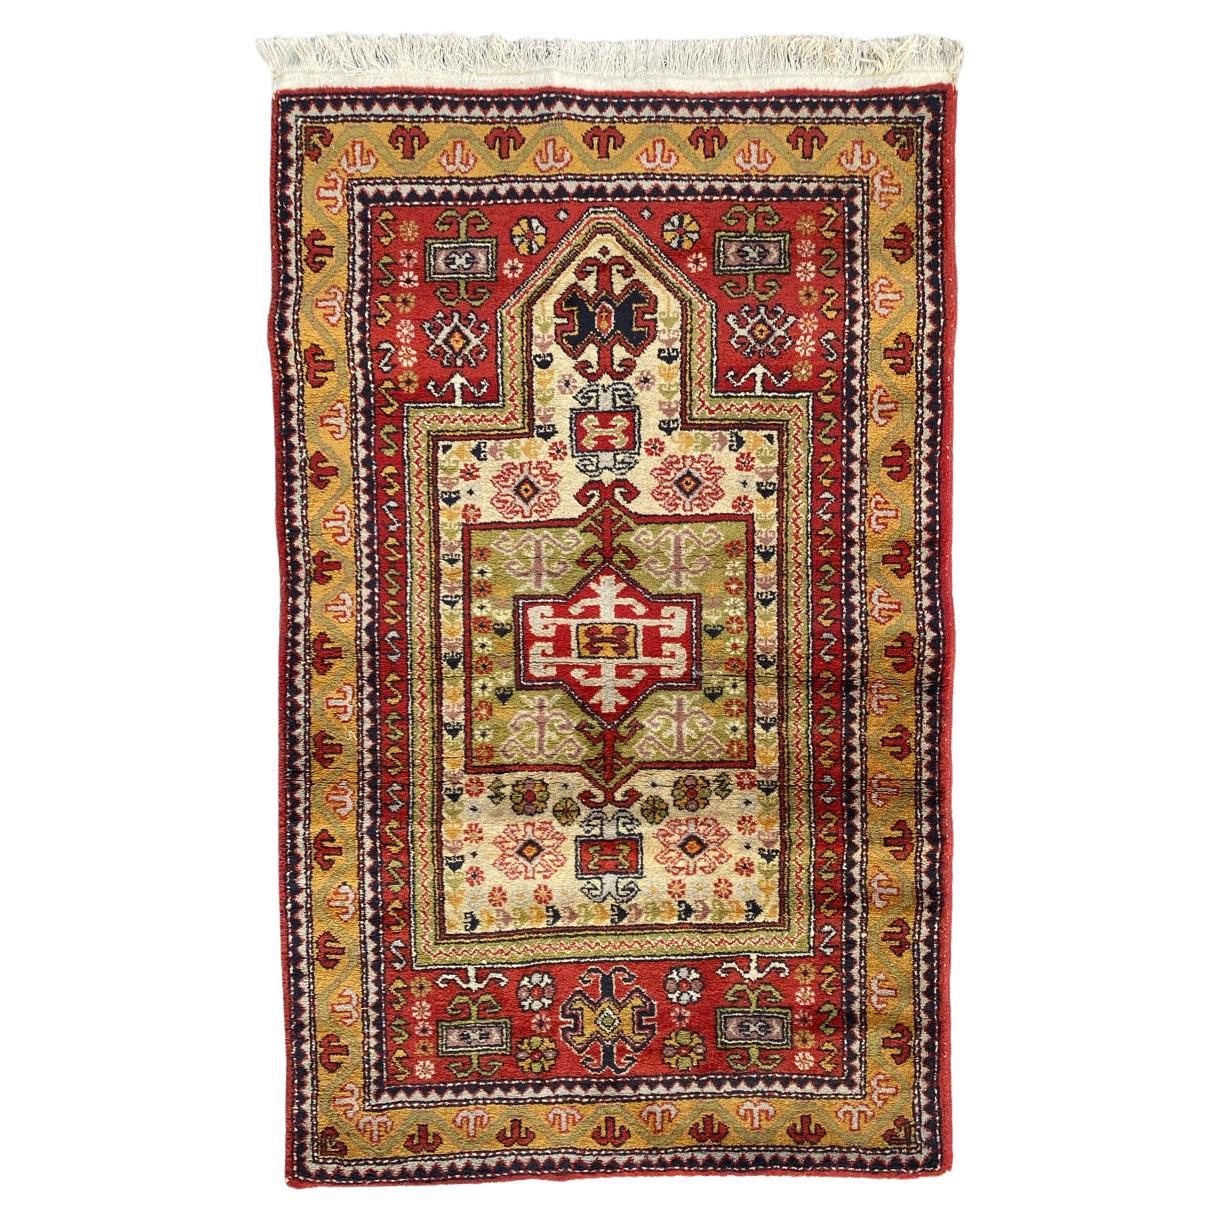 Le joli tapis vintage d'Azerbaïdjan de Bobyrug